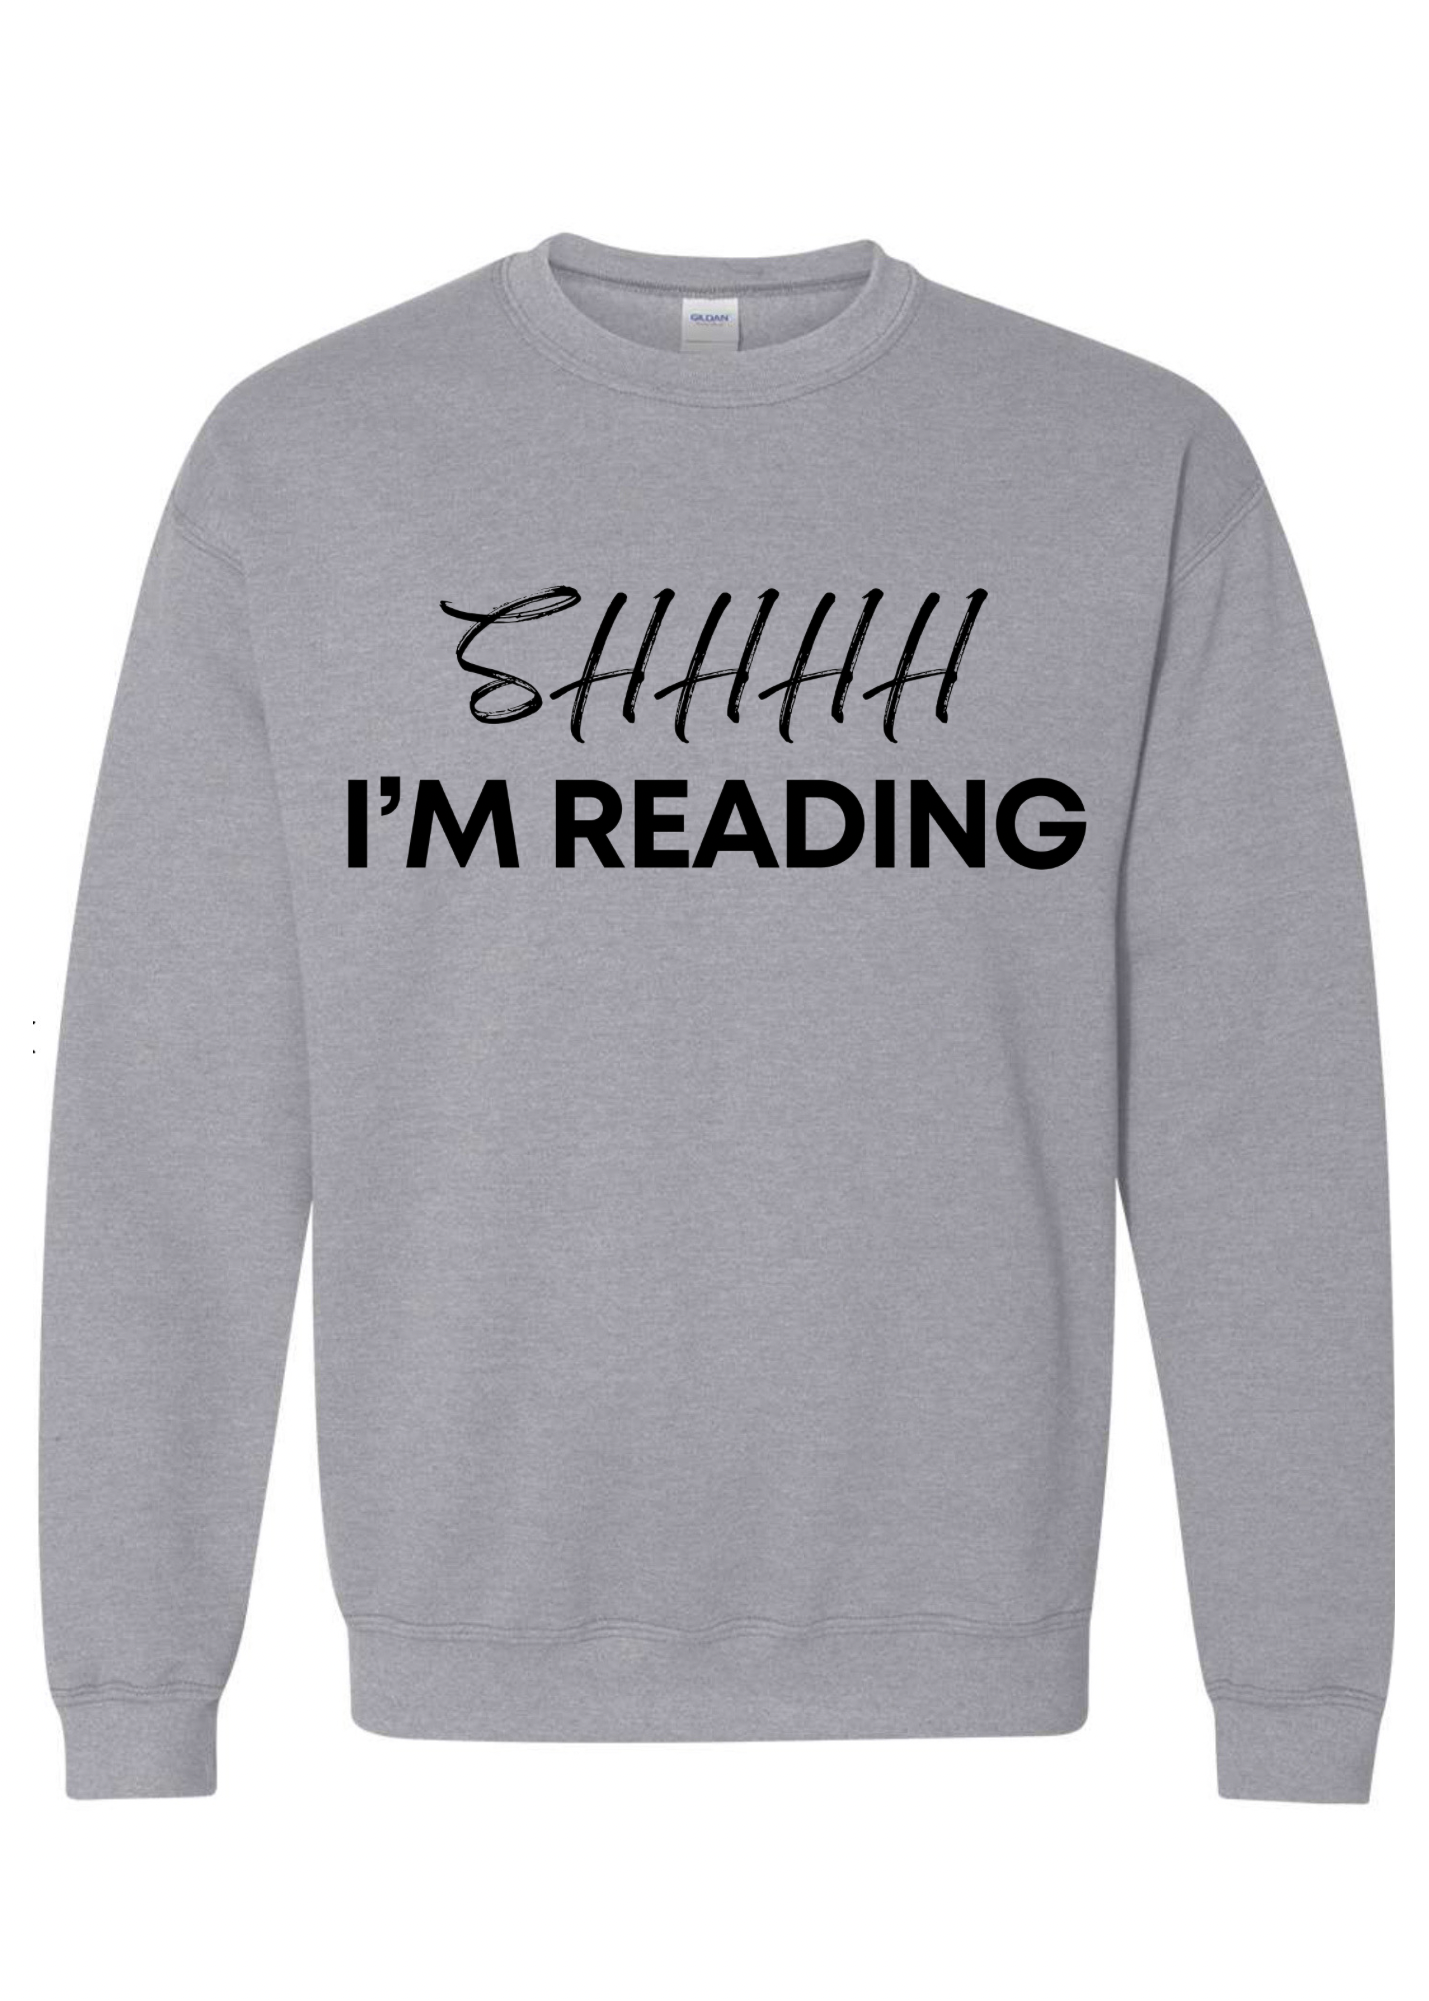 Shhhh I’m Reading Crew Sweatshirt  - 3 colors available